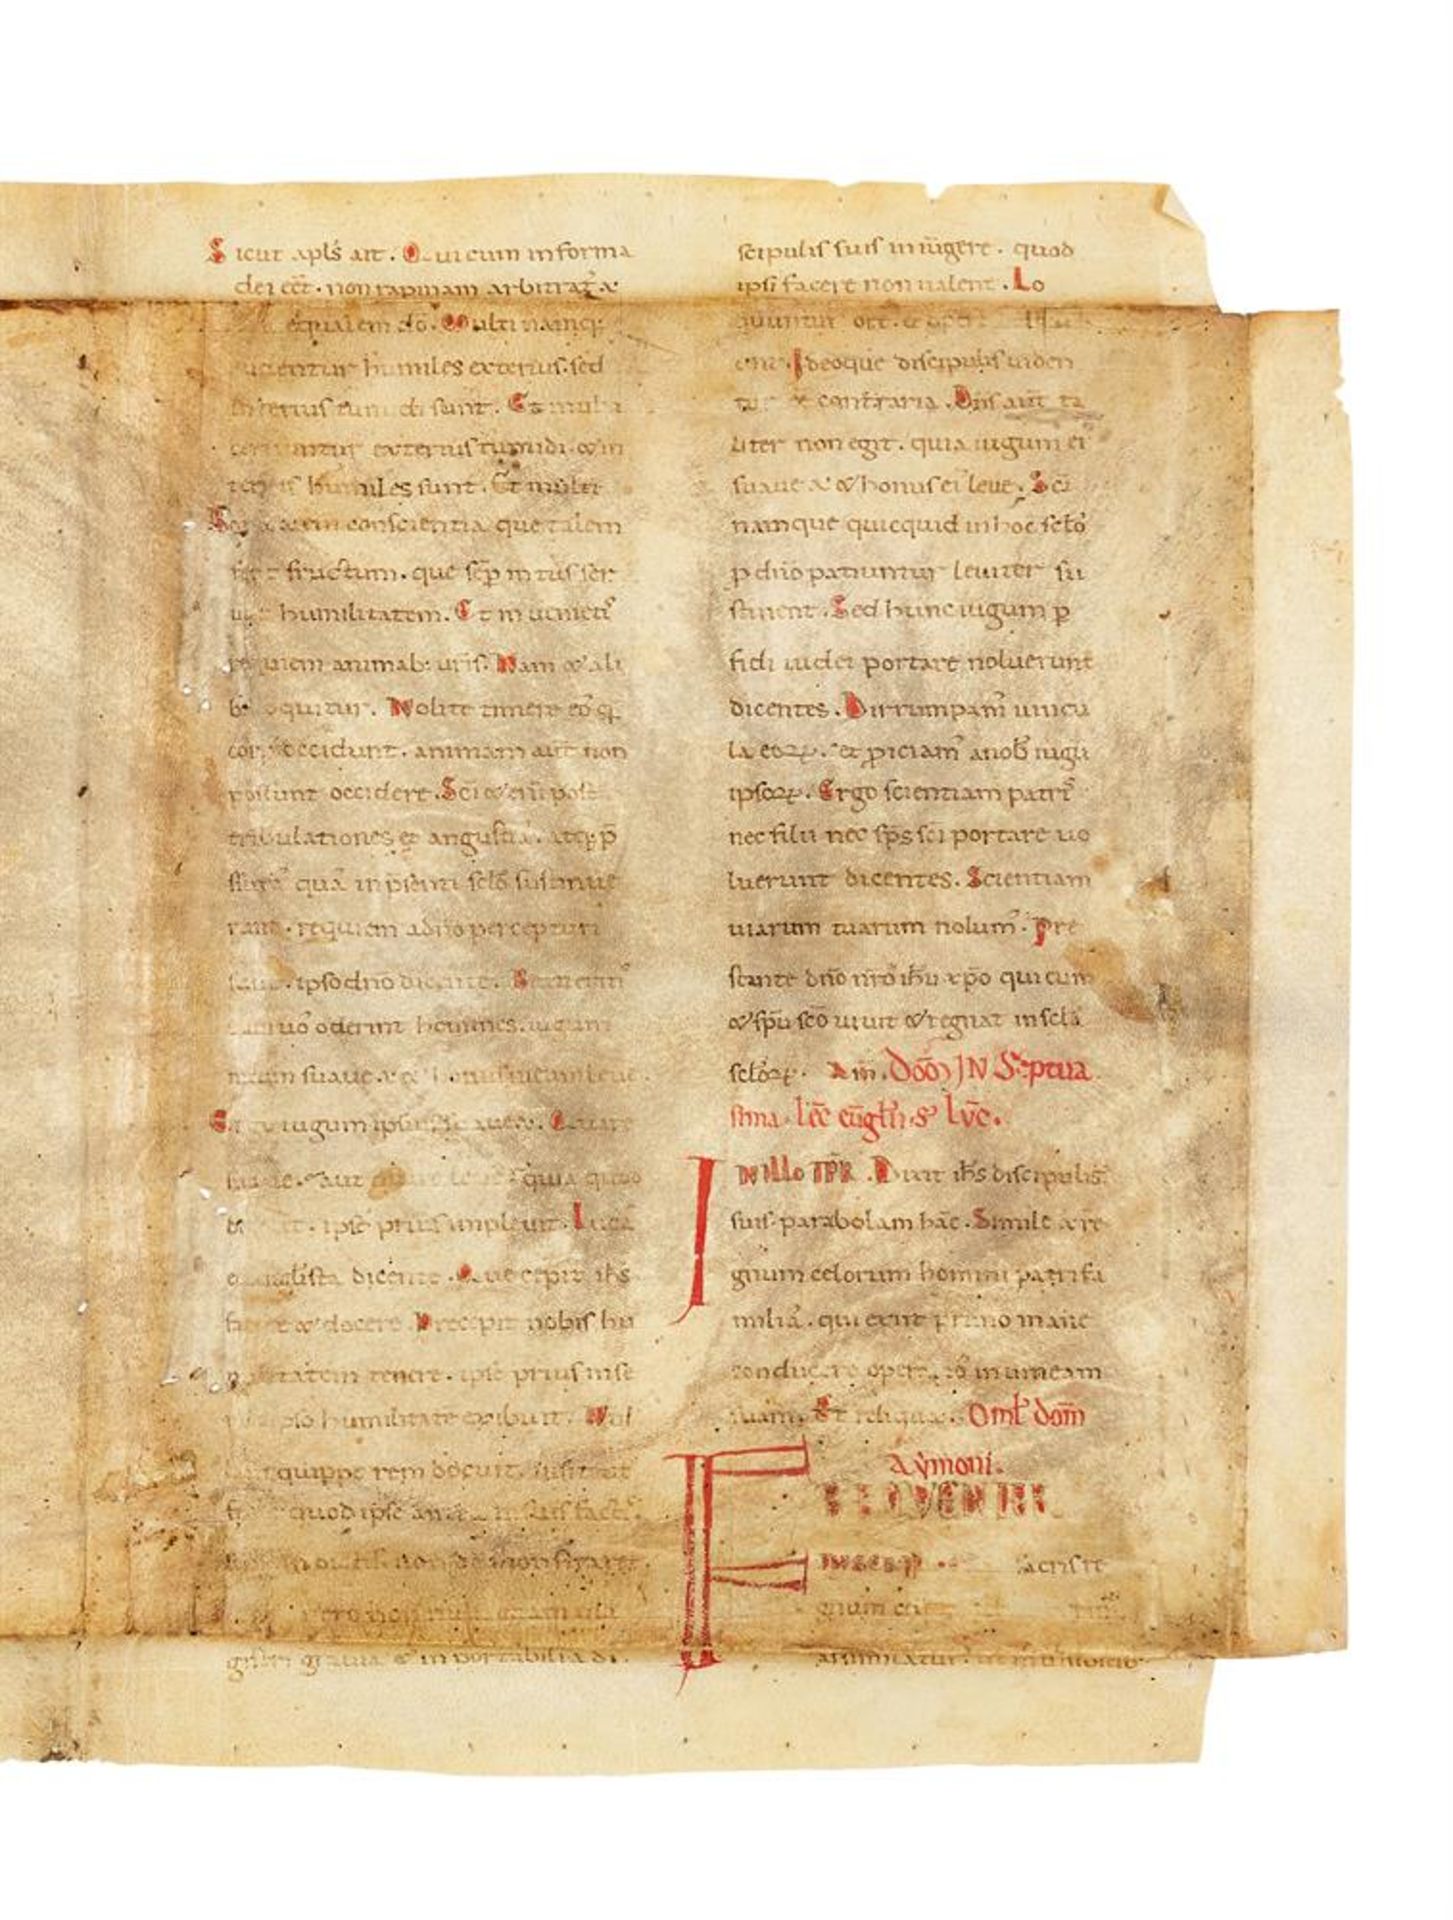 Bifolium from a Sacramentary, in Latin, manuscript on parchment